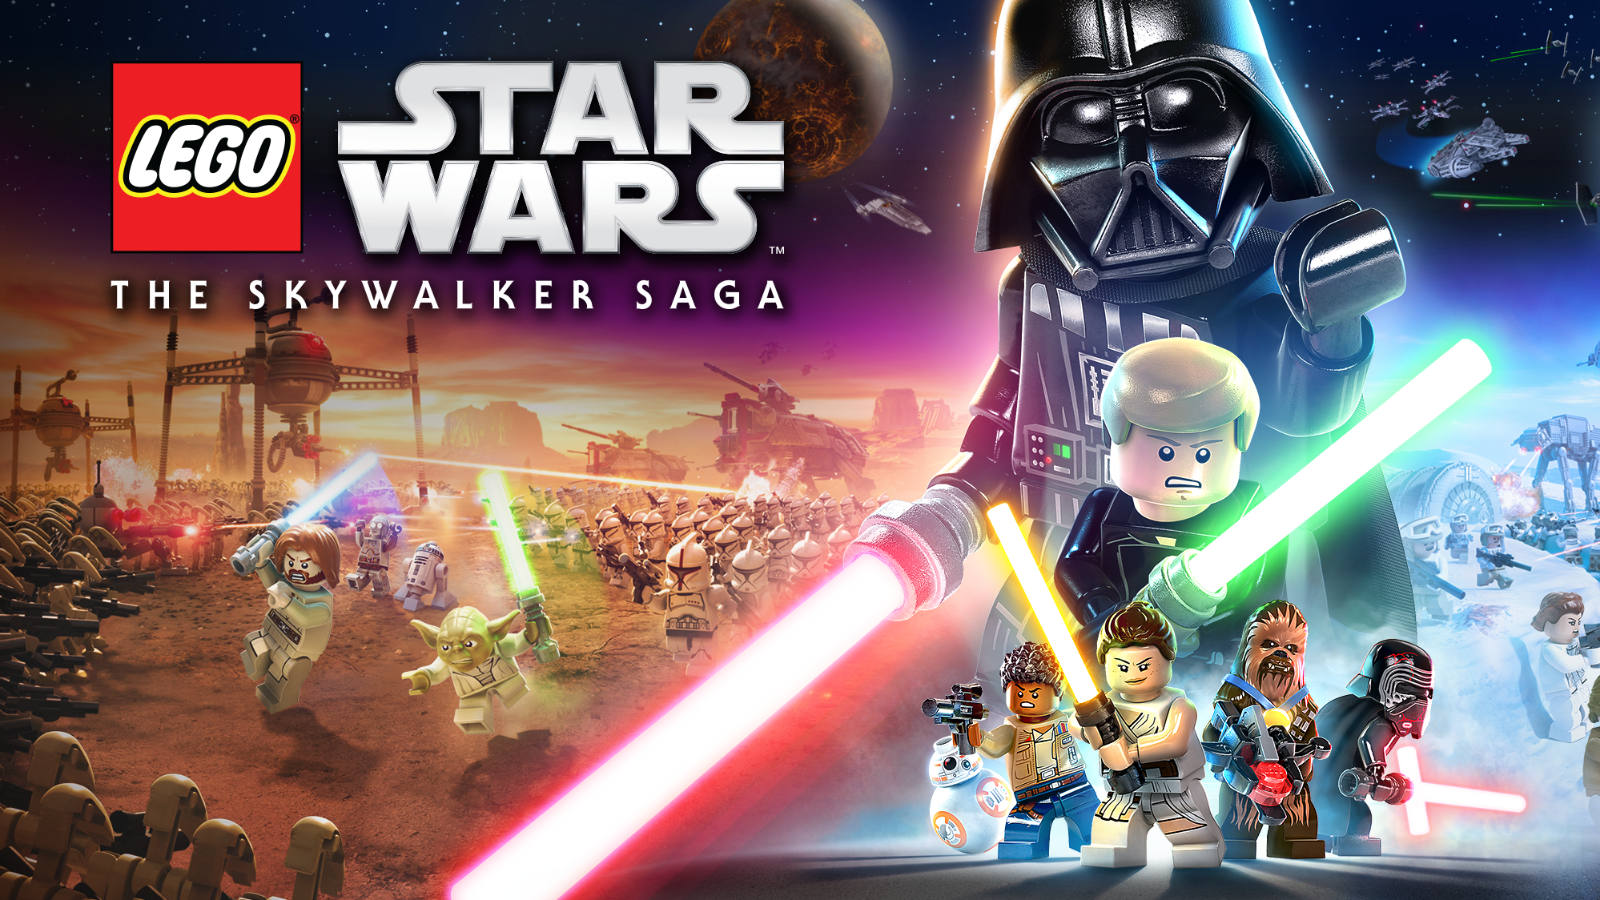 Exciting Adventures Await in Lego Star Wars: The Skywalker Saga